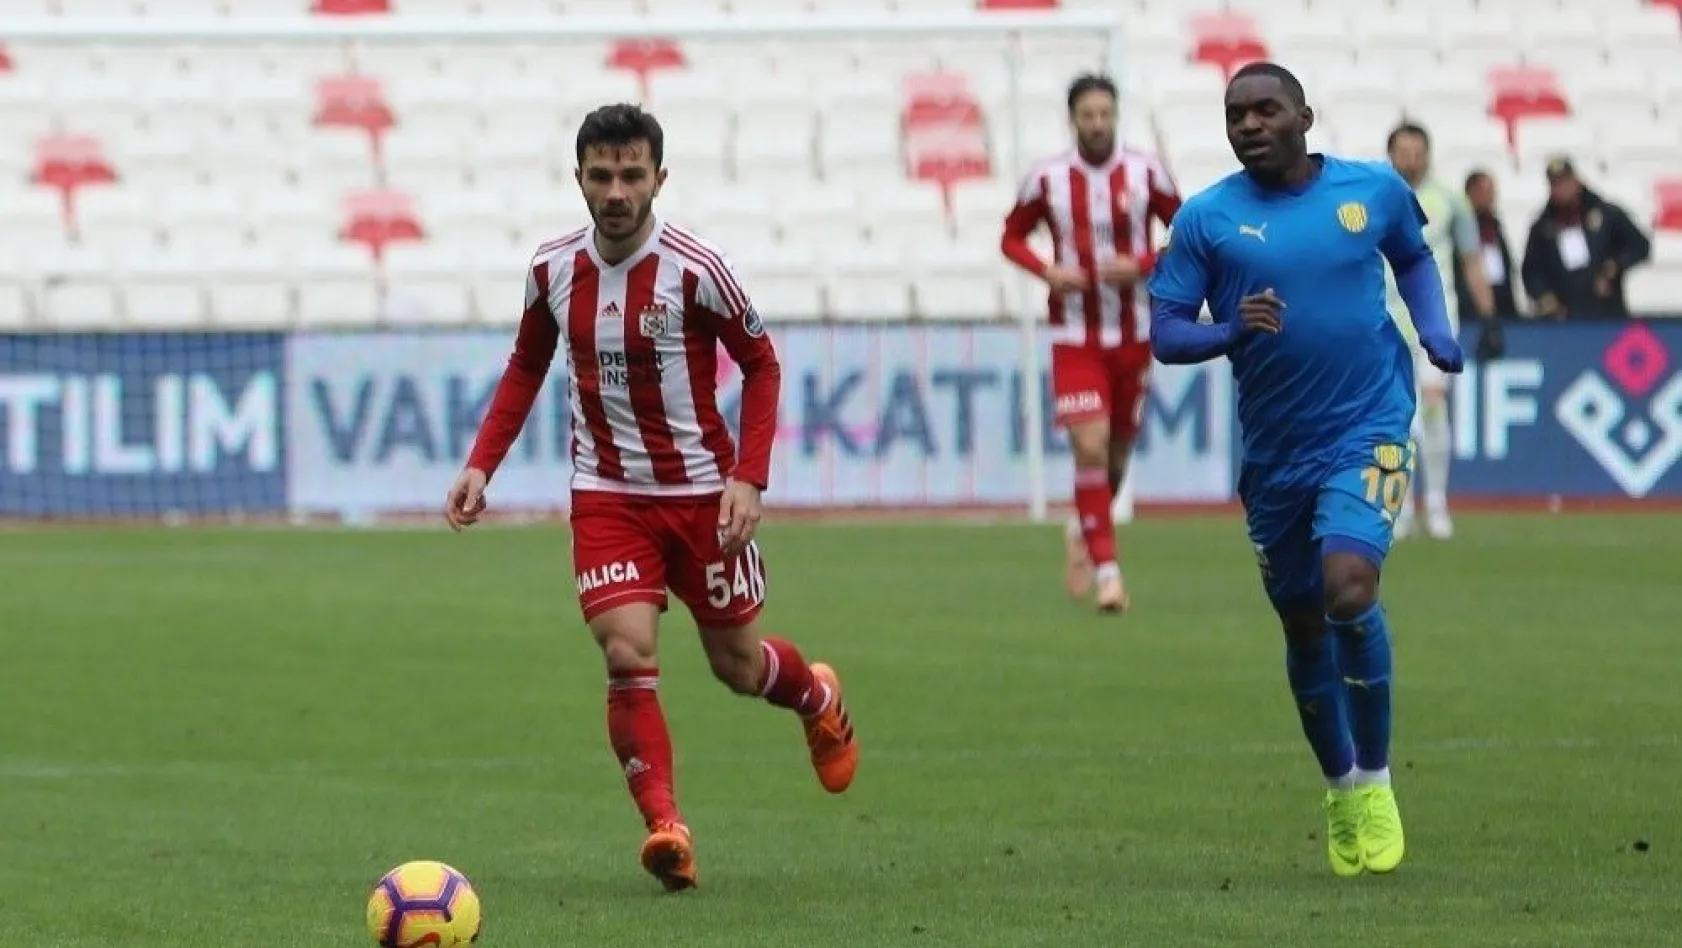 Spor Toto Süper Lig: DG Sivasspor: 4 - MKE Ankaragücü: 0 (Maç sonucu )
